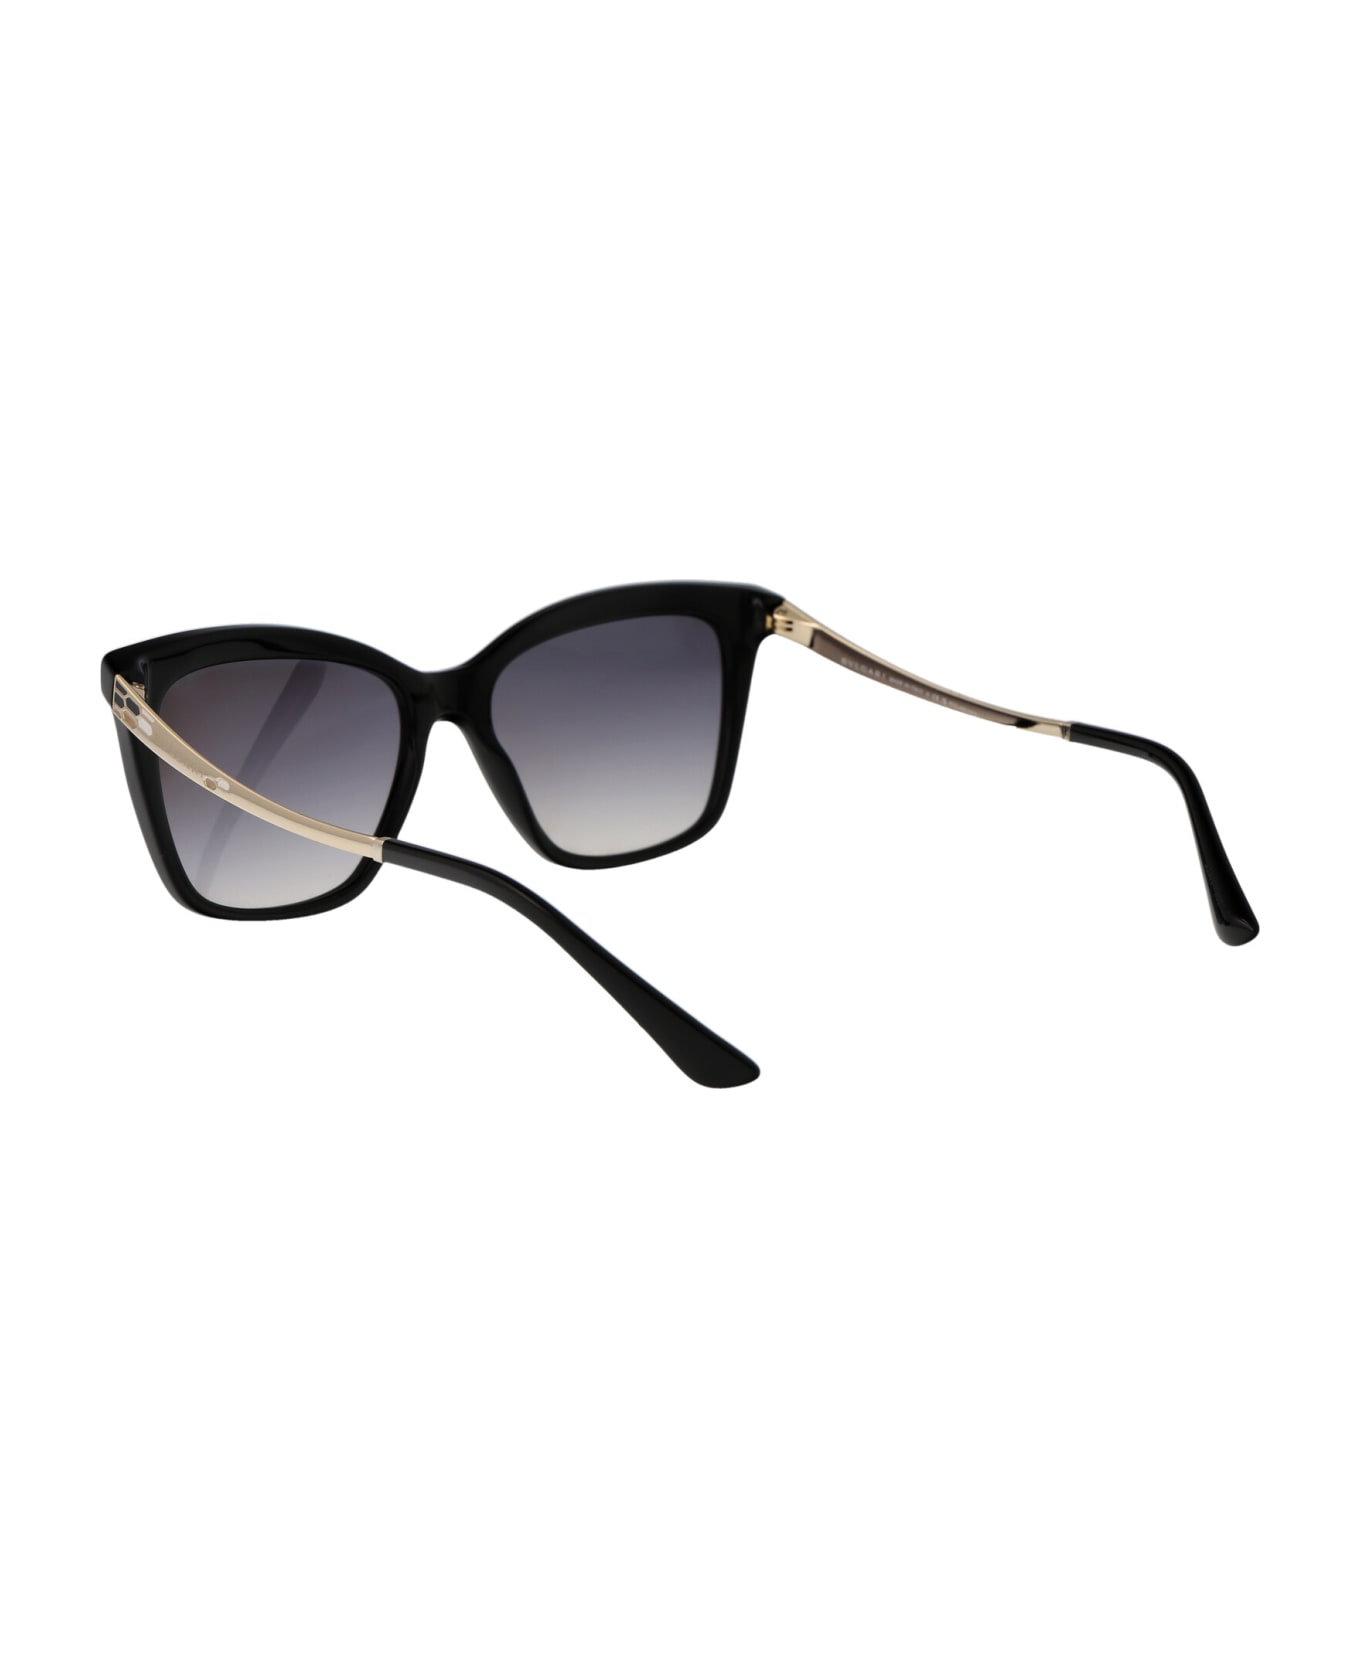 Bulgari 0bv8257 Sunglasses - 501/T3 BLACK